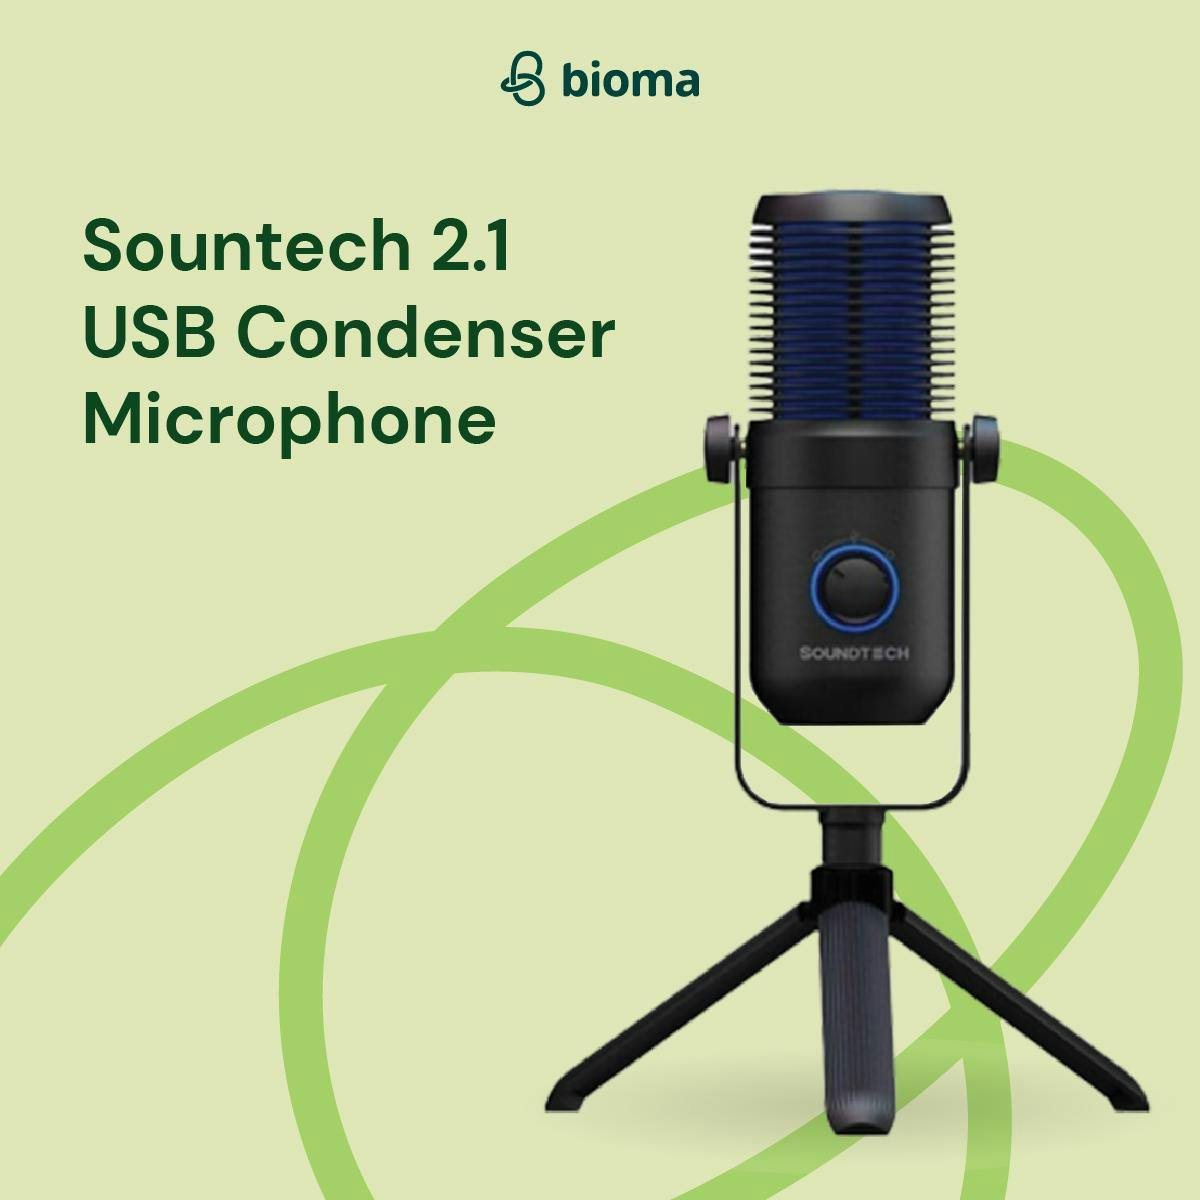 SOUNDTECH 2.1 USB Condenser Microphone